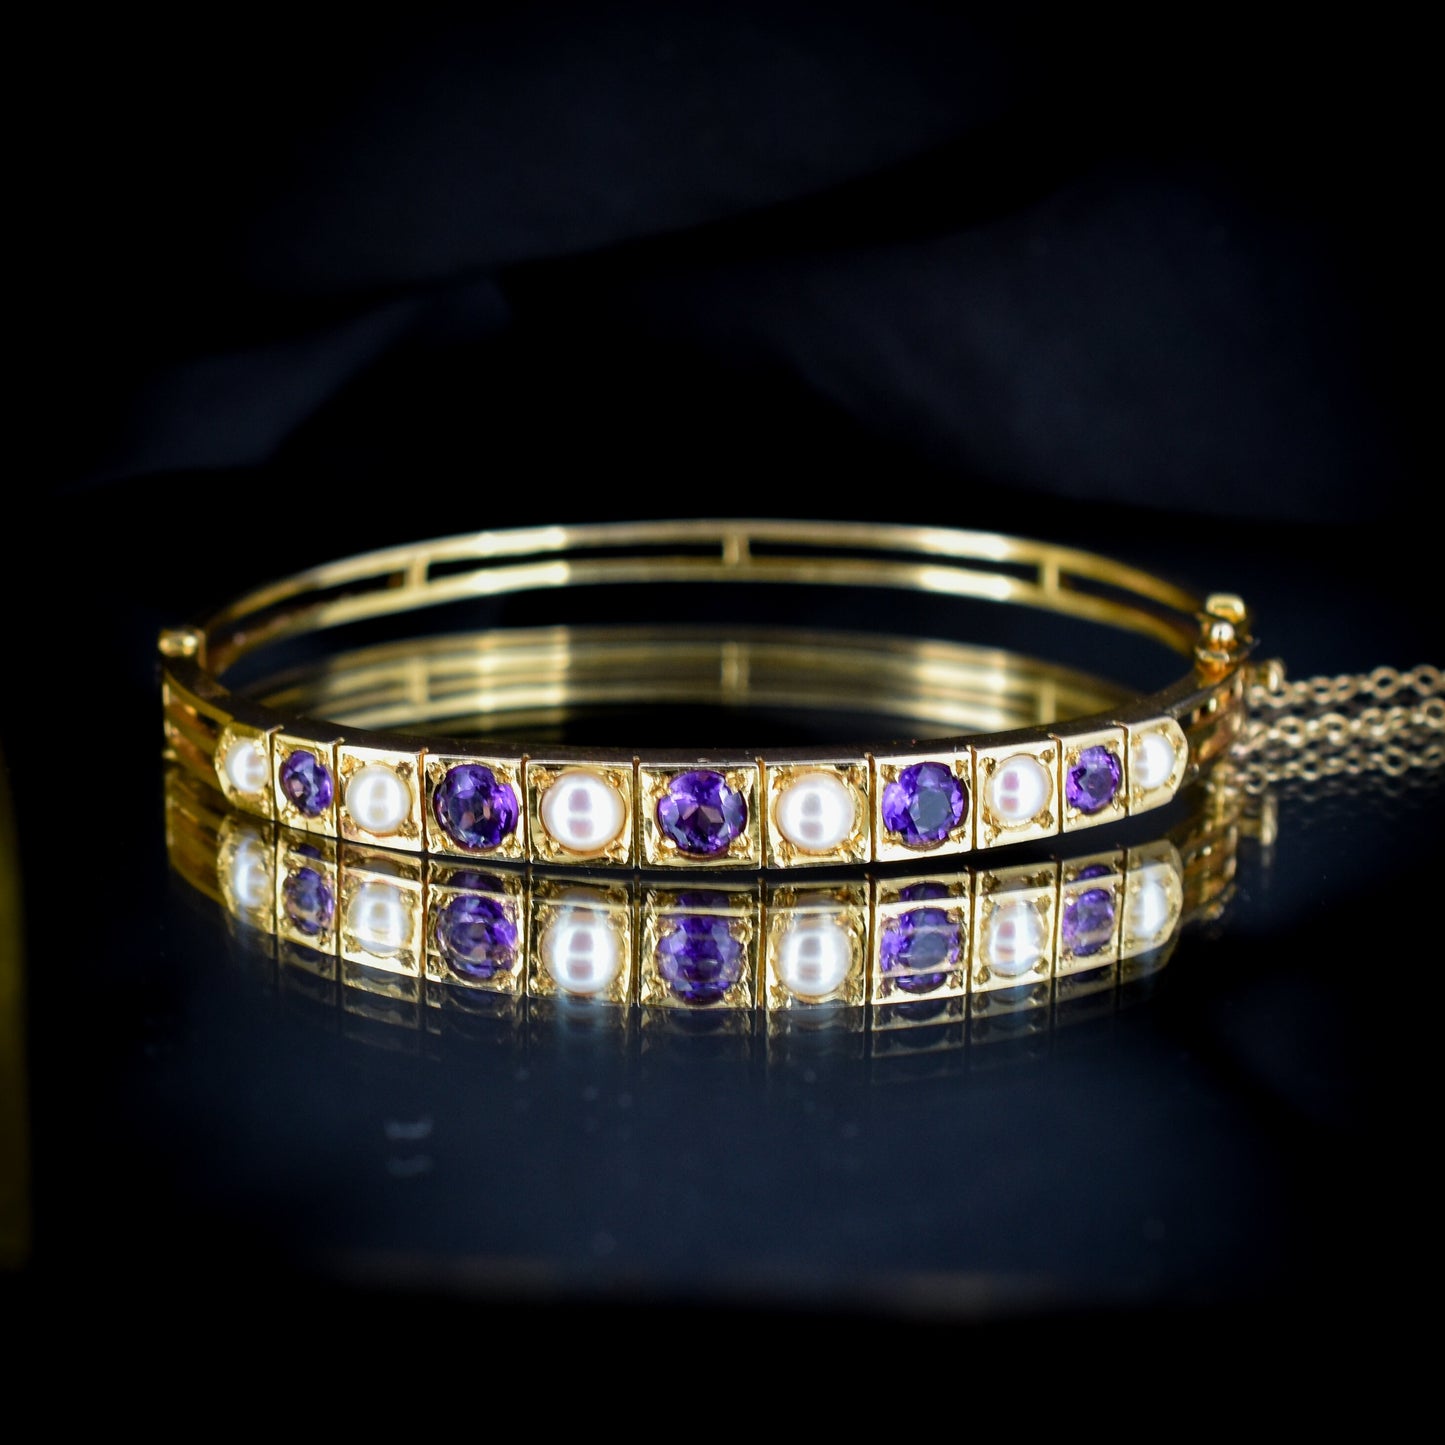 Vintage Pearl and Amethyst 9ct Gold Bangle Bracelet